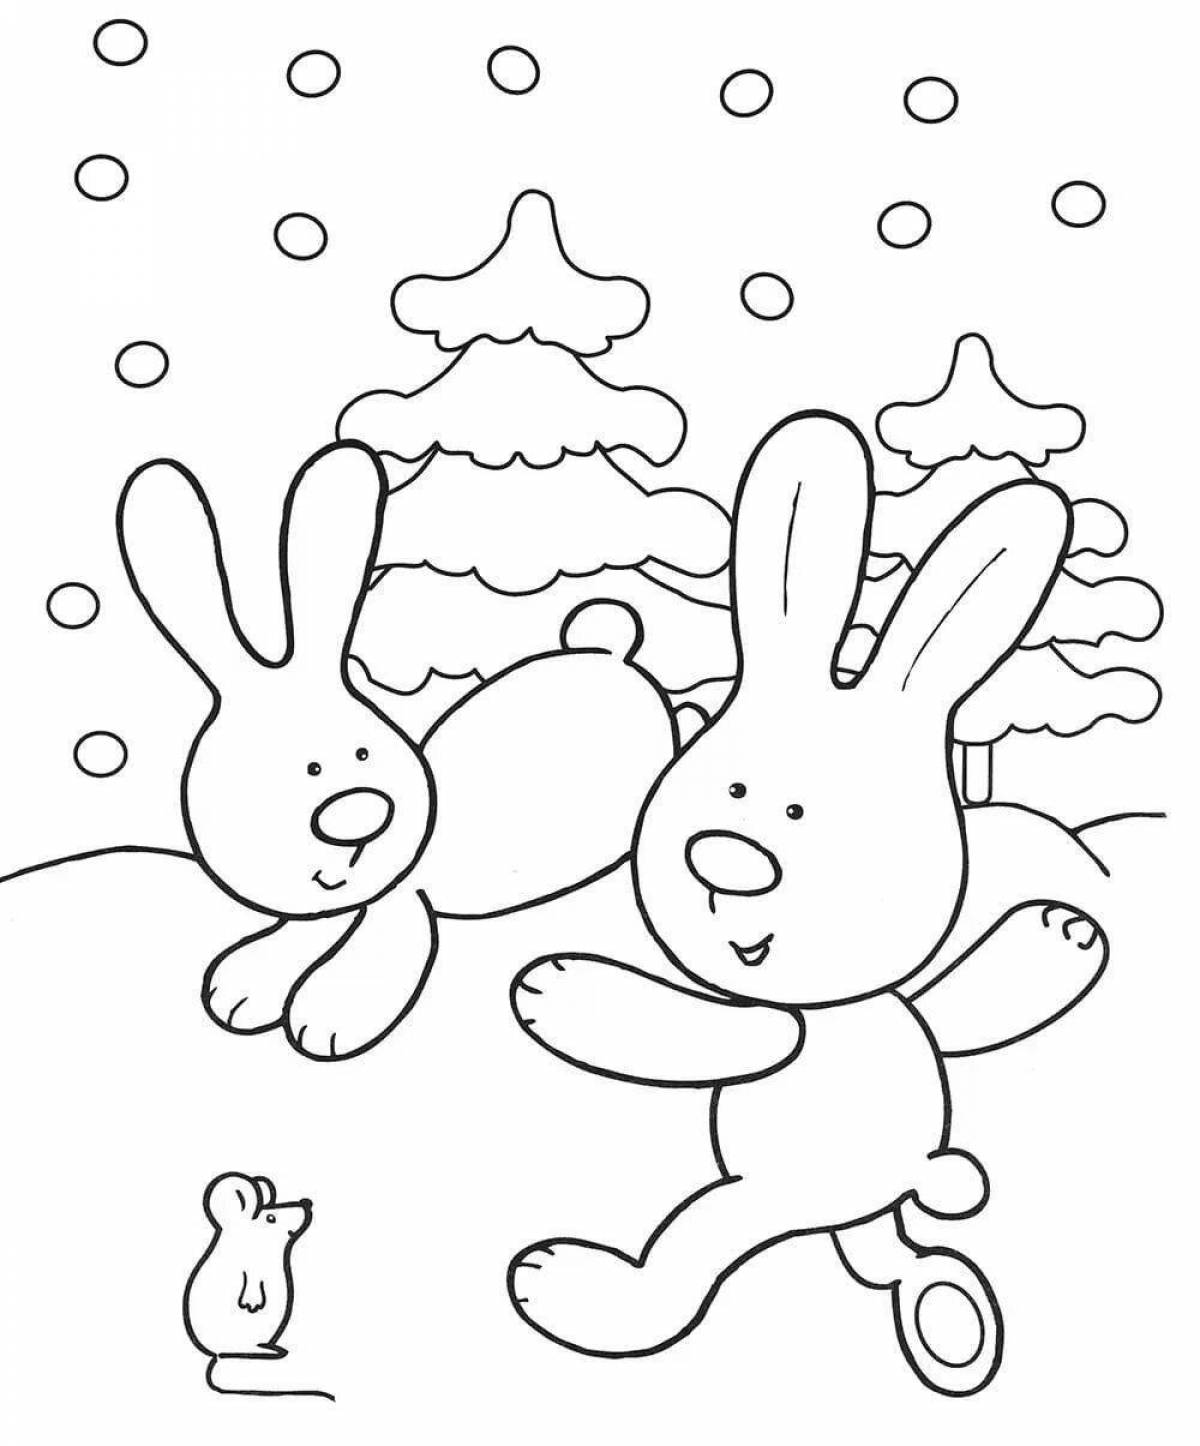 Cute winter rabbit coloring book